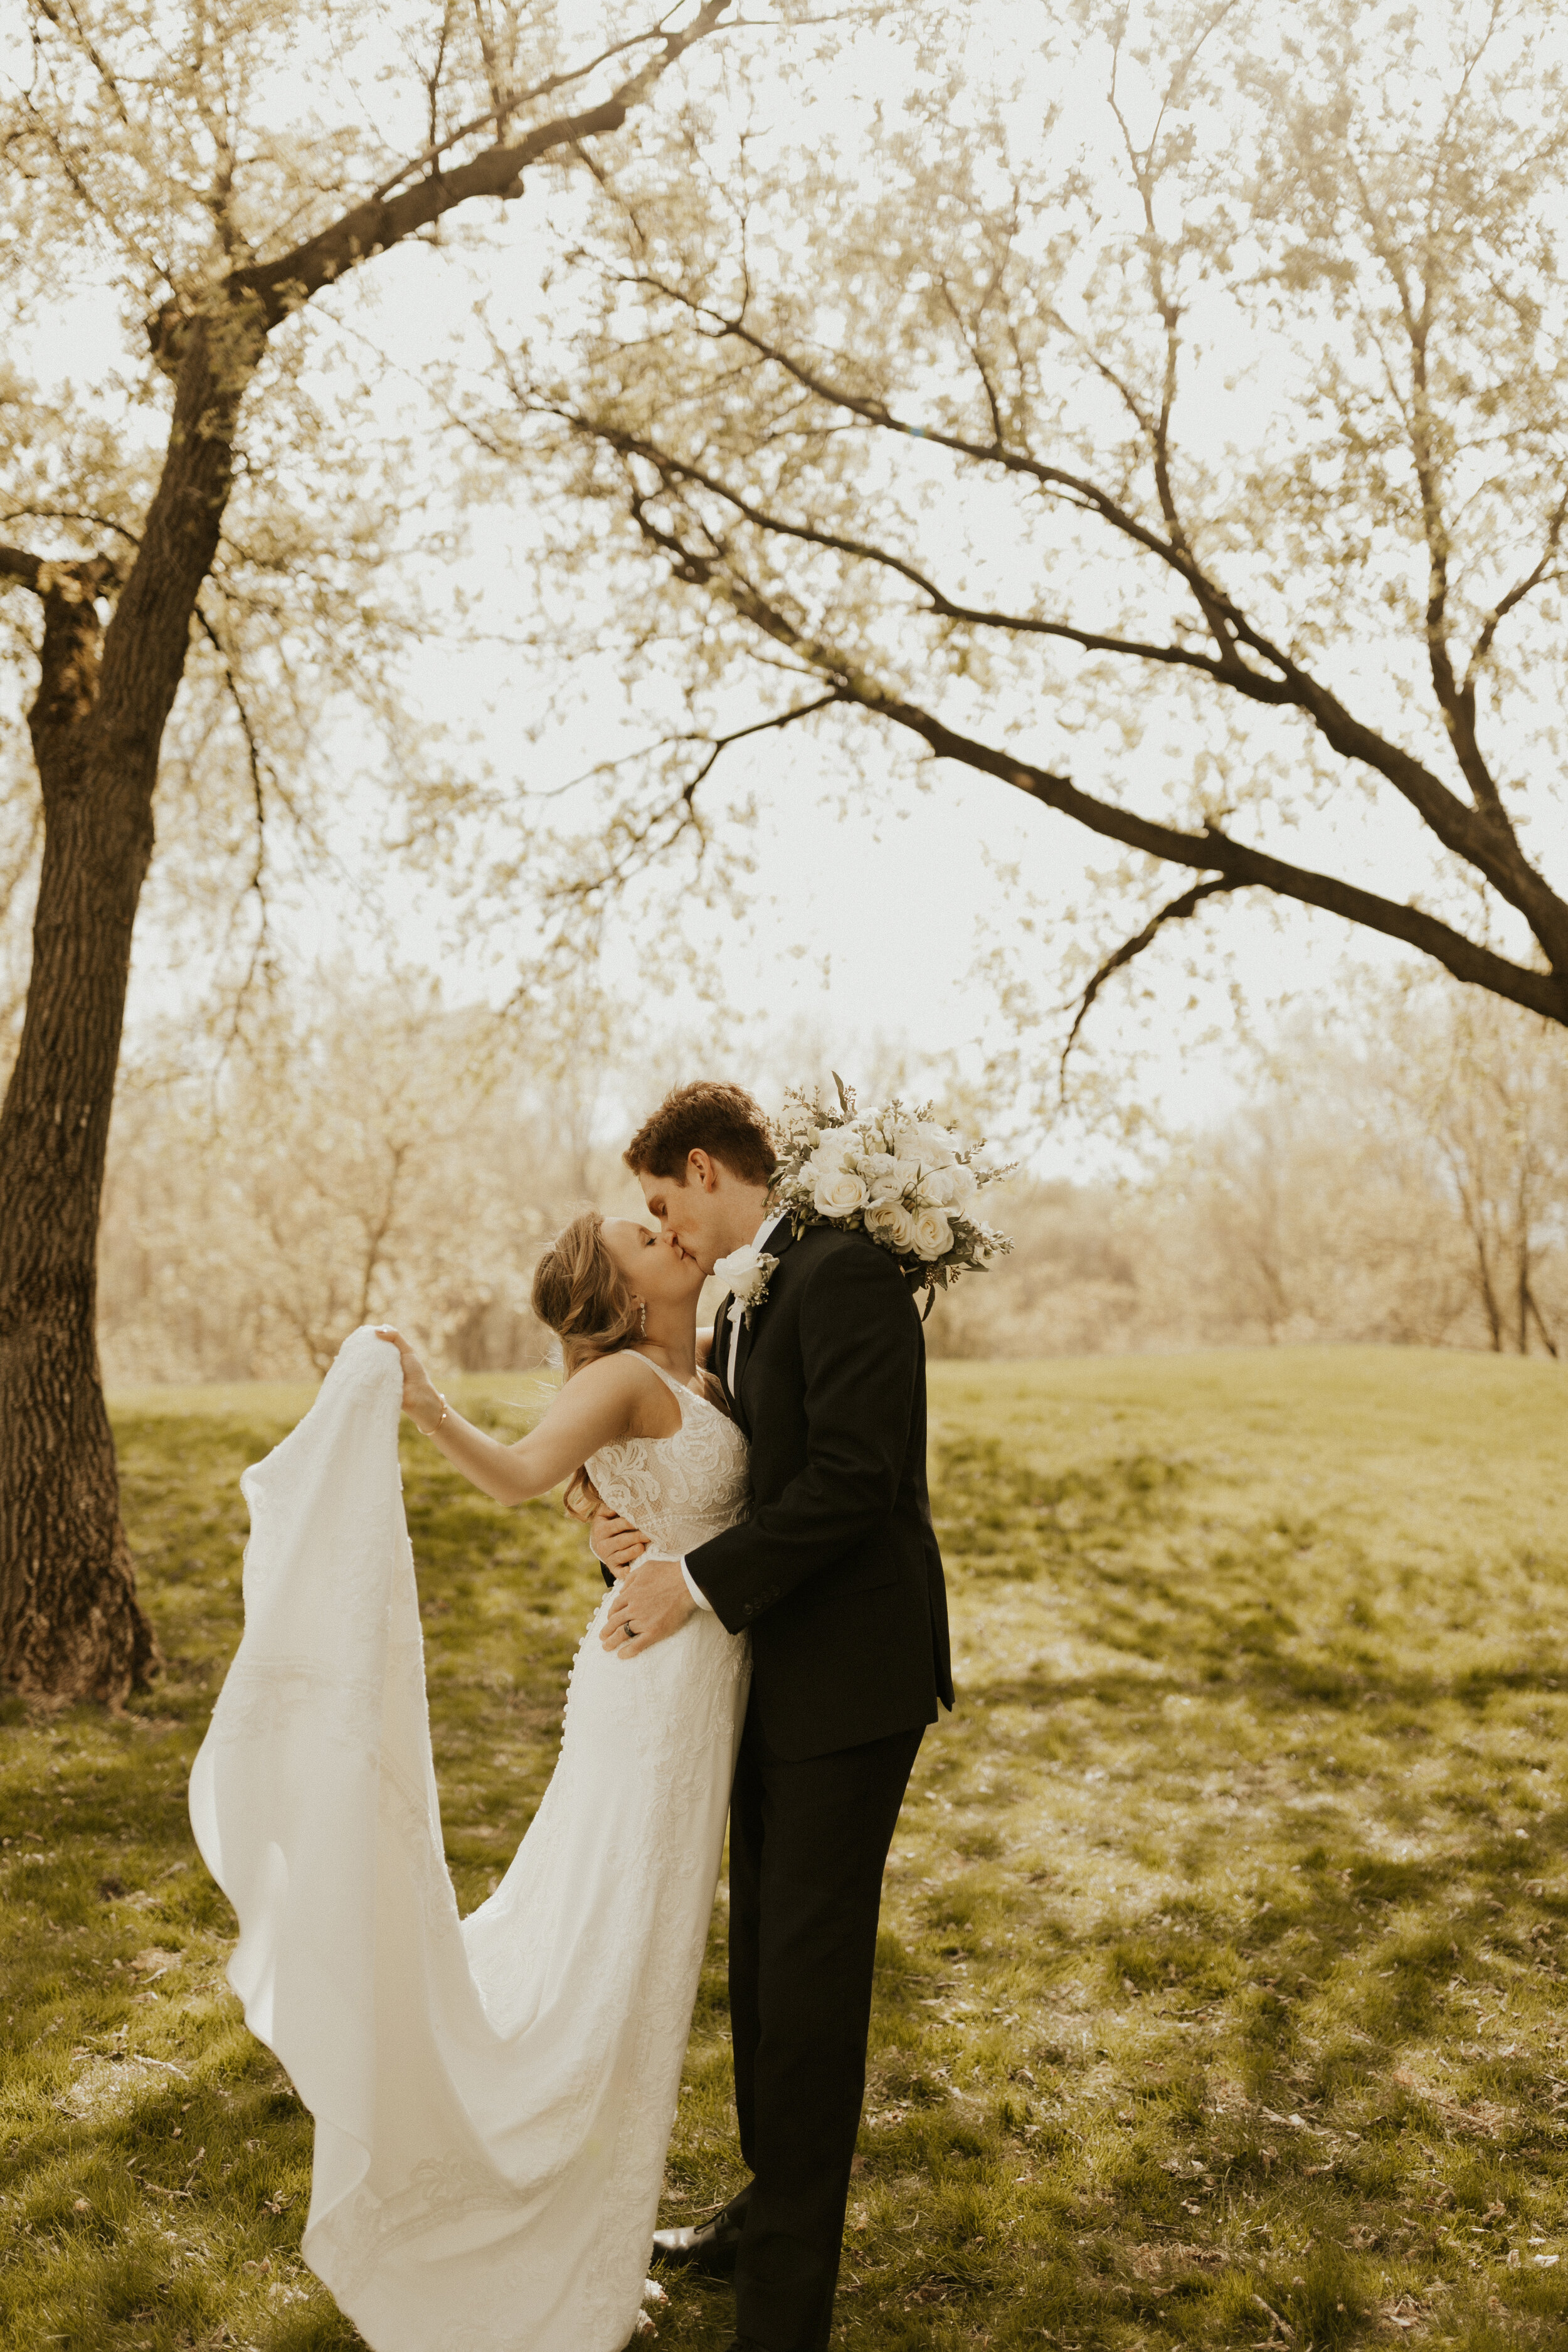 Erika + Randy | Intimate Spring Minnesota Wedding  | Minnesota Wedding Photographer_014.jpg